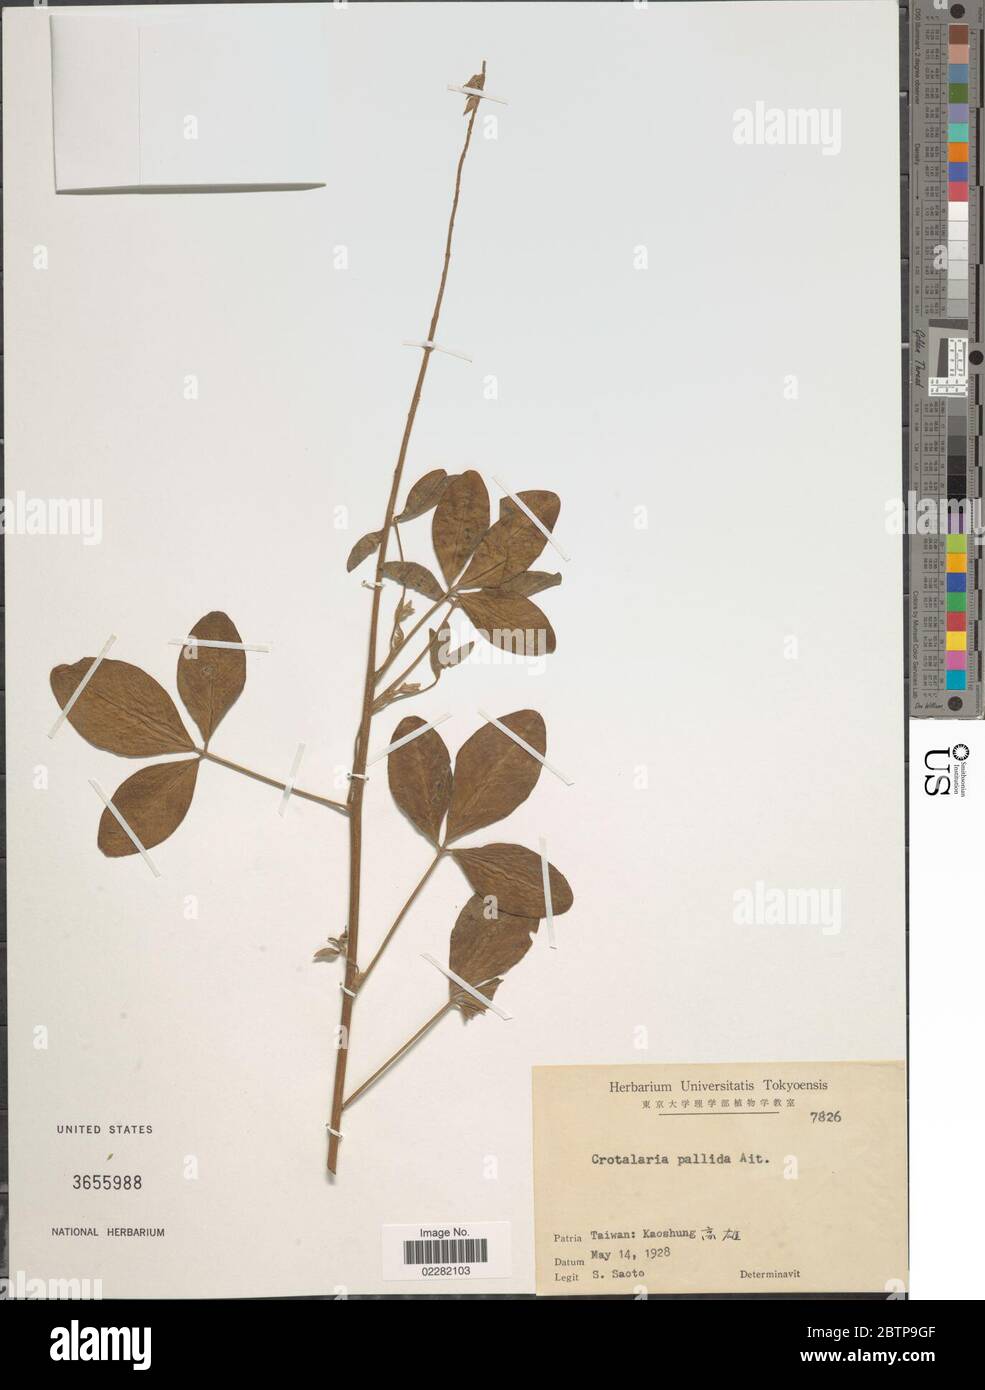 Crotalaria pallida Aiton. Stock Photo